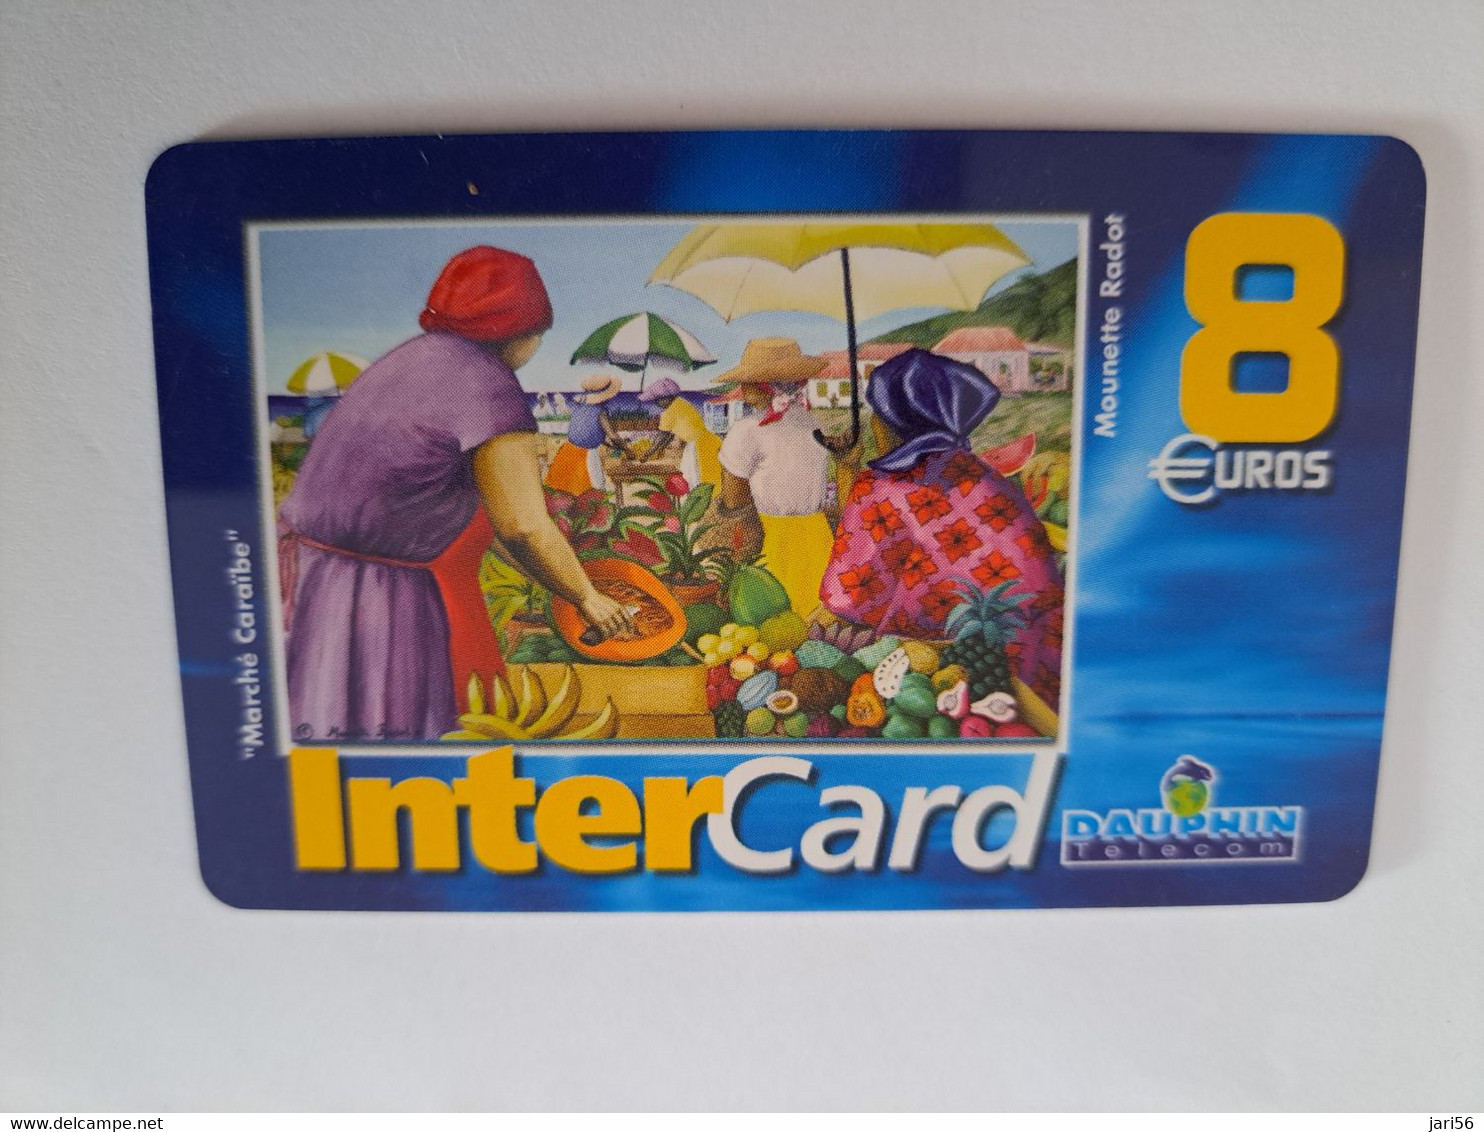 ST MARTIN / INTERCARD  8 EURO  MARCHE CARAIBE         NO 045  Fine Used Card    ** 10902** - Antilles (French)